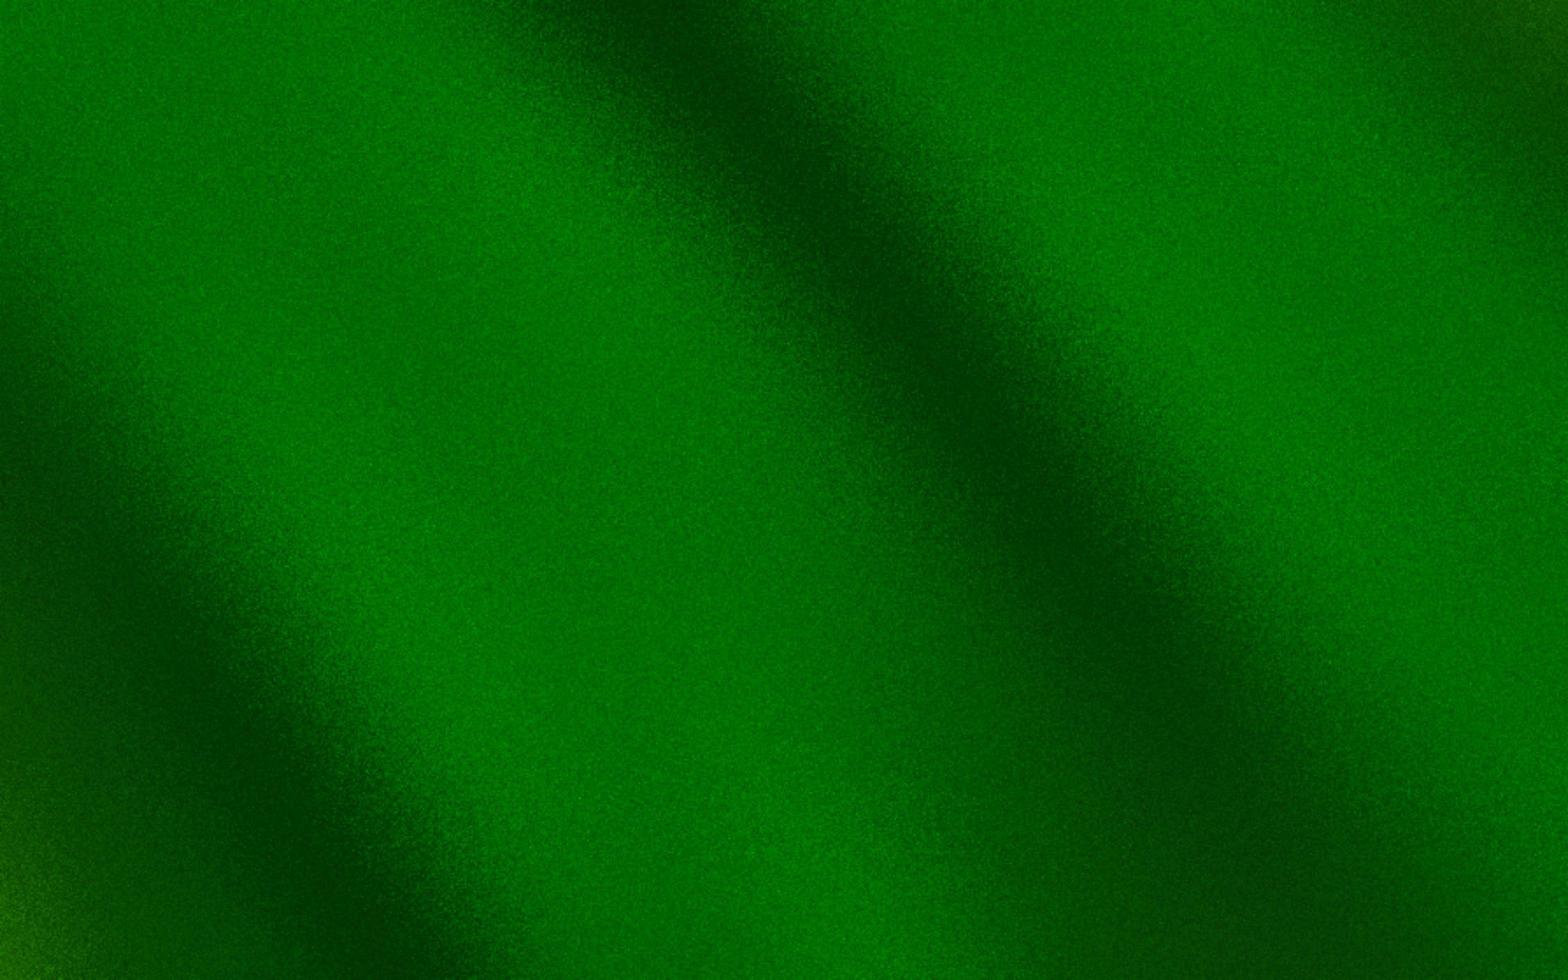 attraktiv grön lutning bakgrund med ljud eller spannmål texturer. grön grunge textur bakgrund. suddig lutning bakgrund. sprutas lutning med de spannmål eller ljud effekter. foto